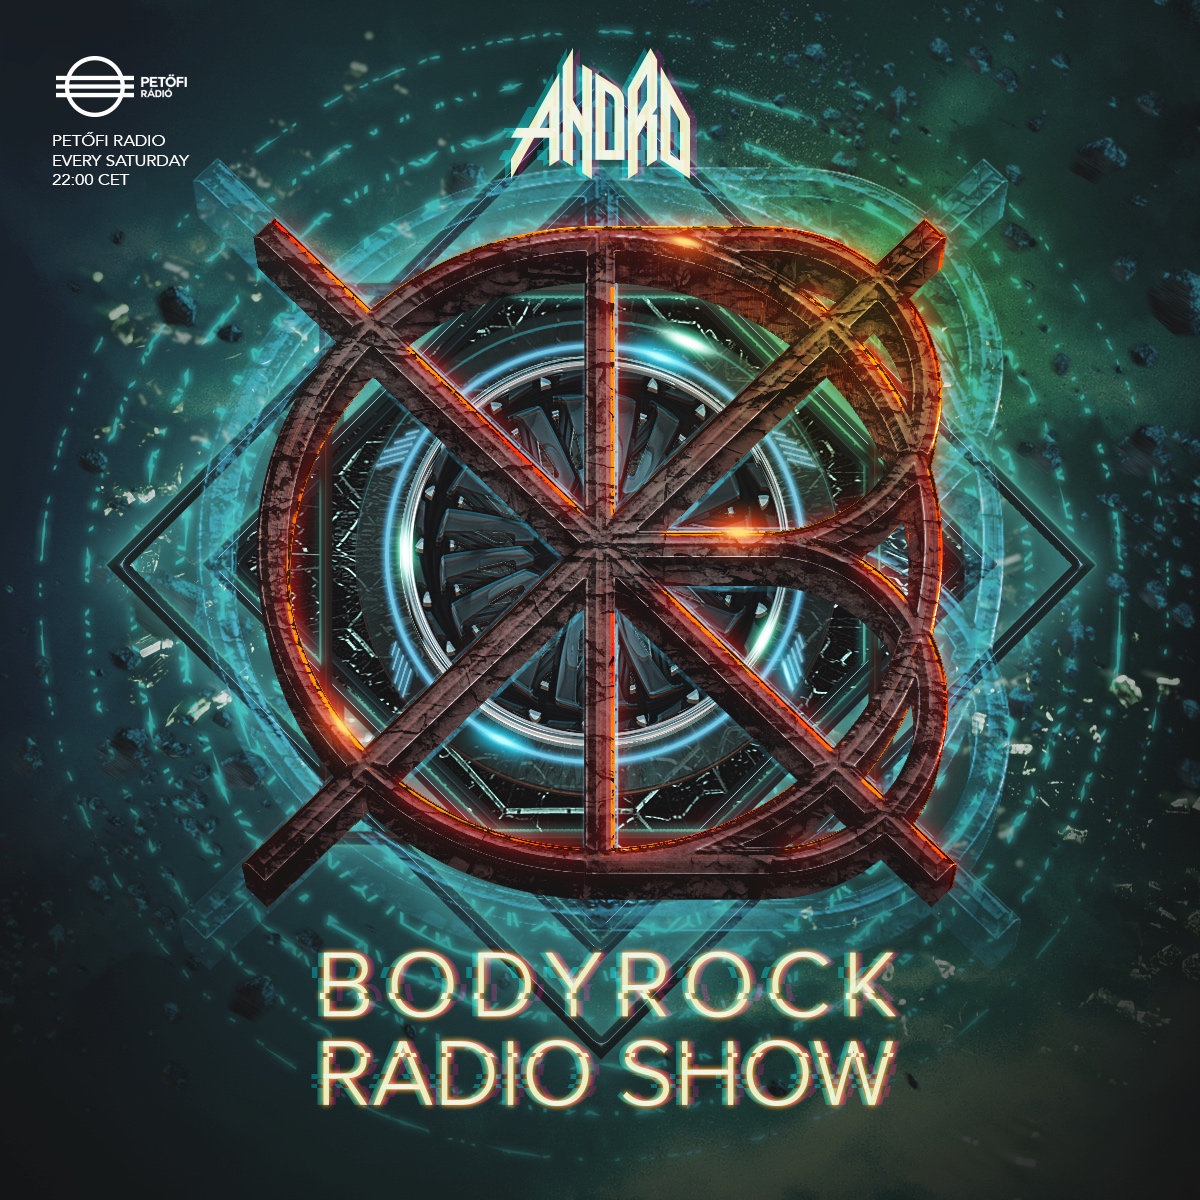 Bodyrock Radio Show 25 (2015)